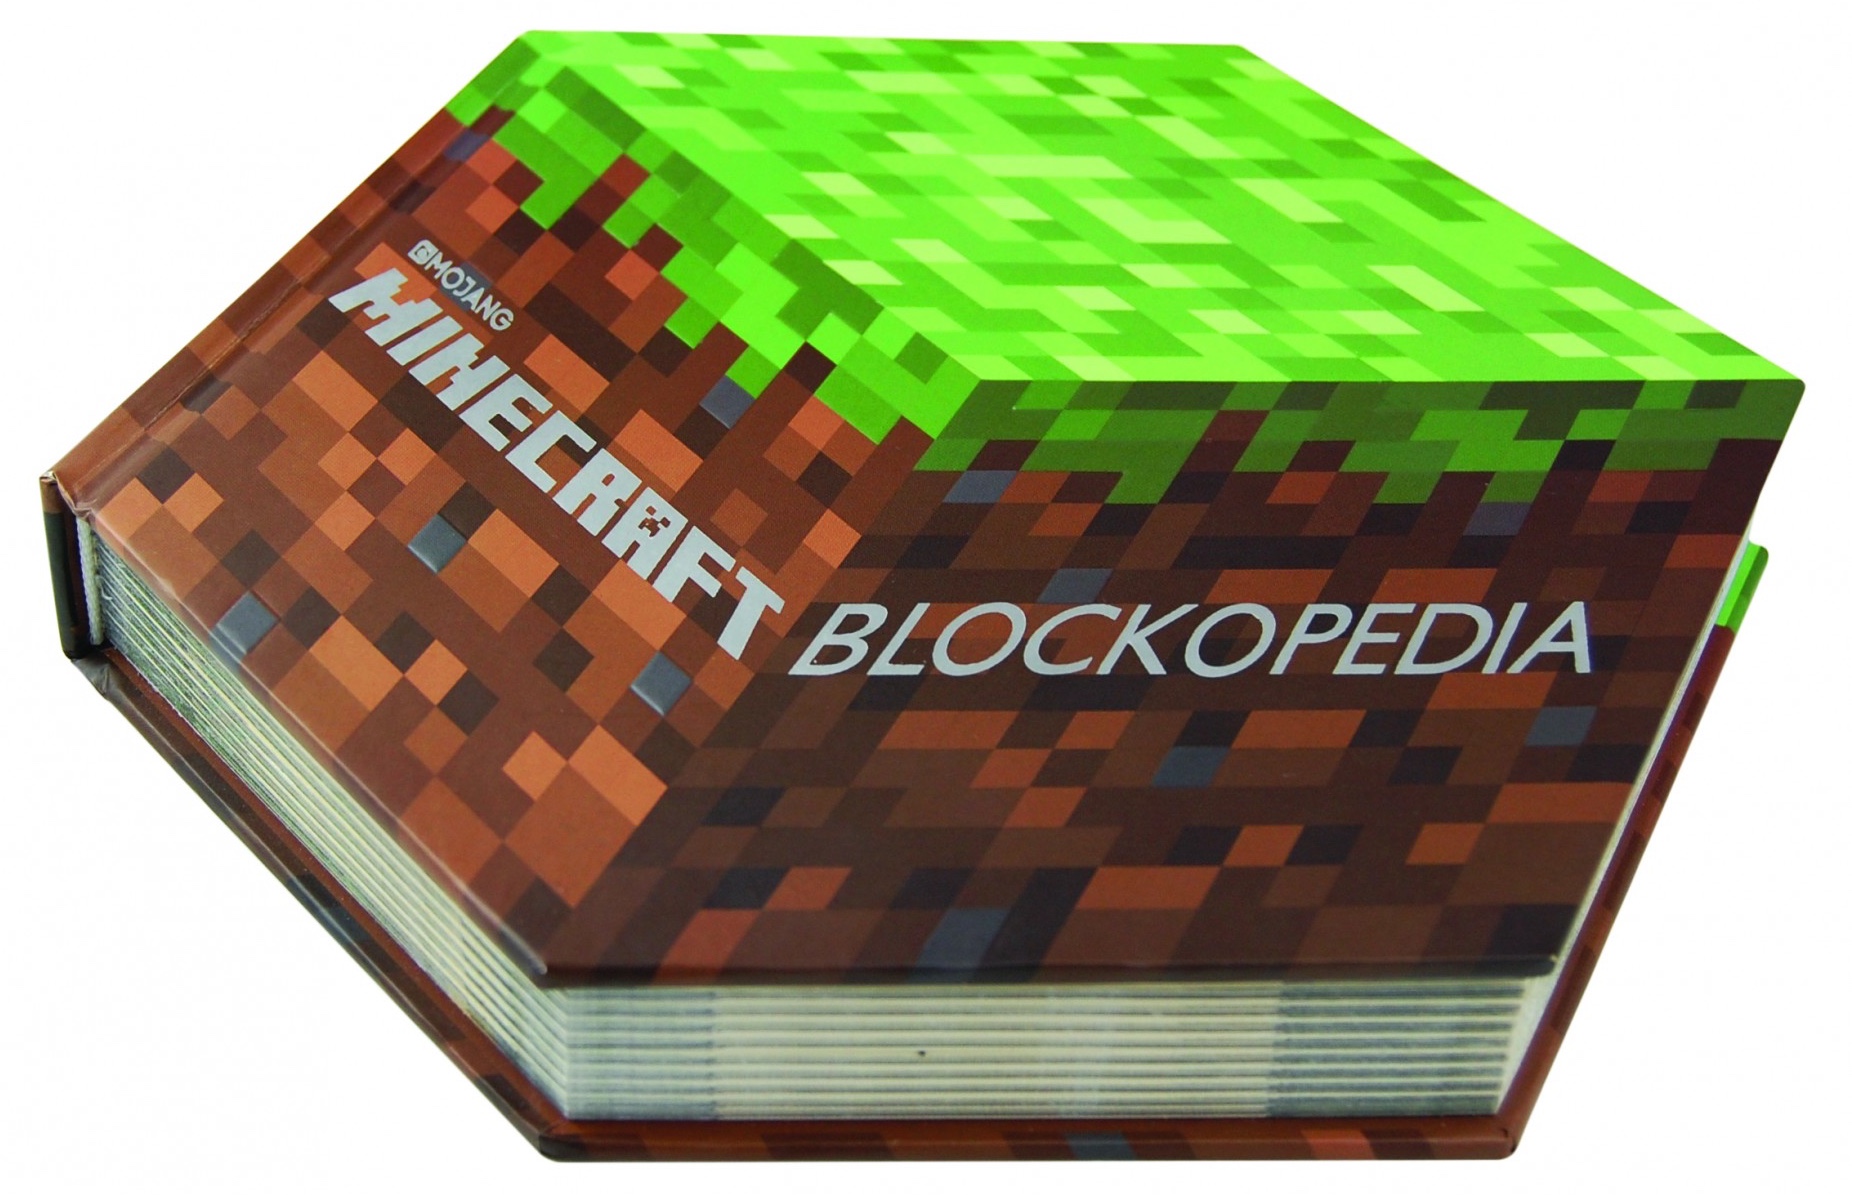 Photograph of the hexagonal book, Minecraft Blockopedia